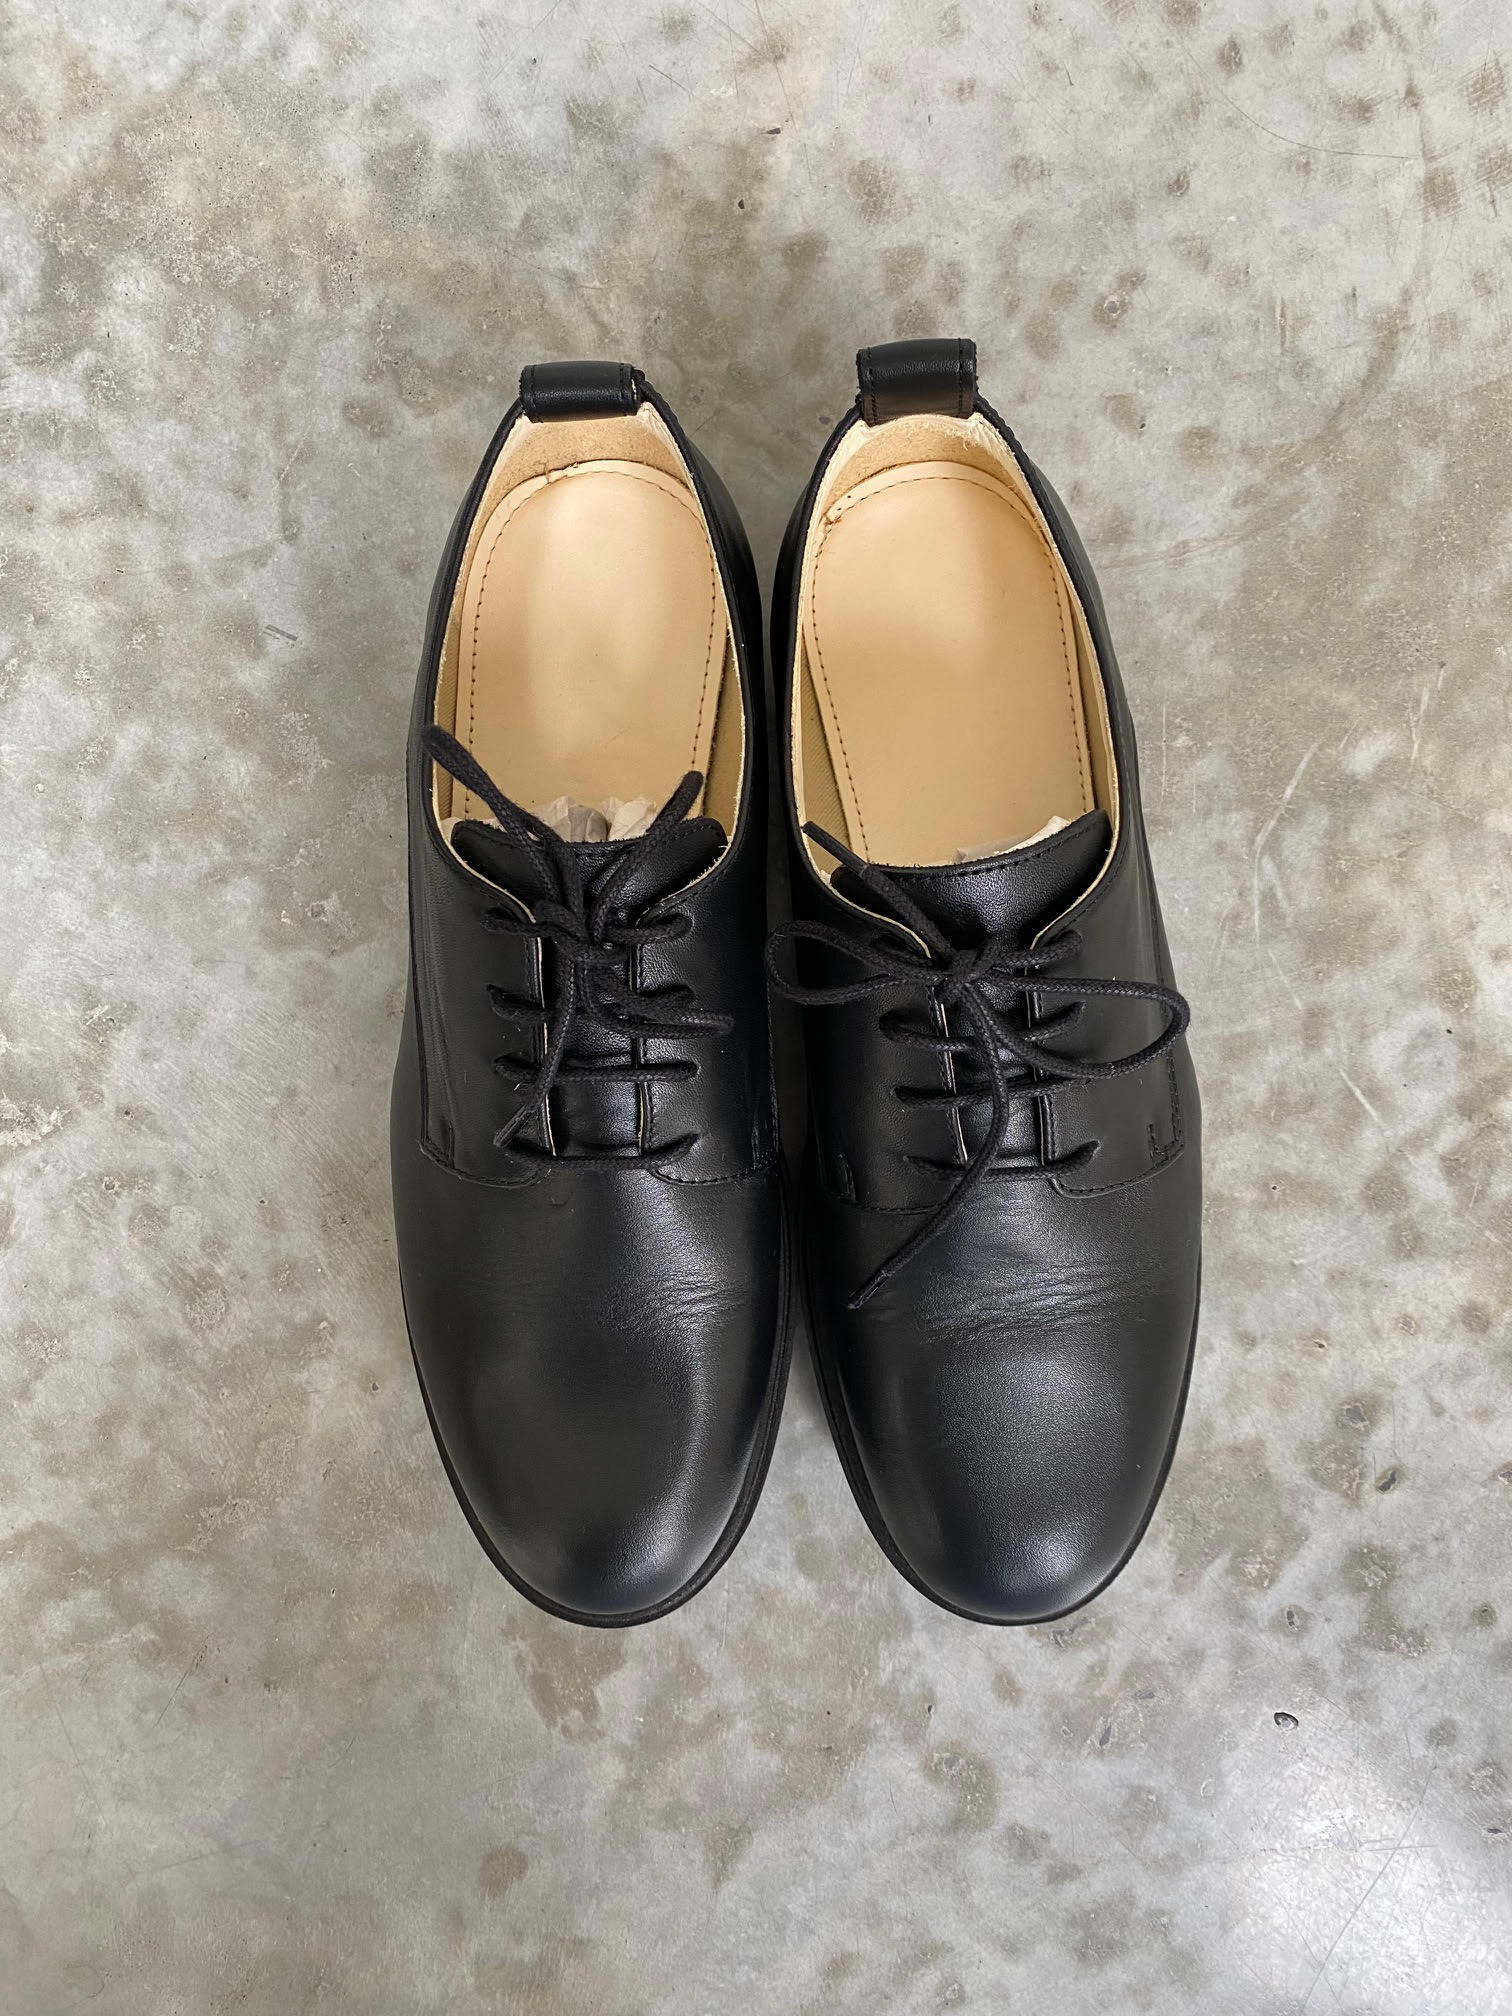 Verona Shoes in Black UK Size 8